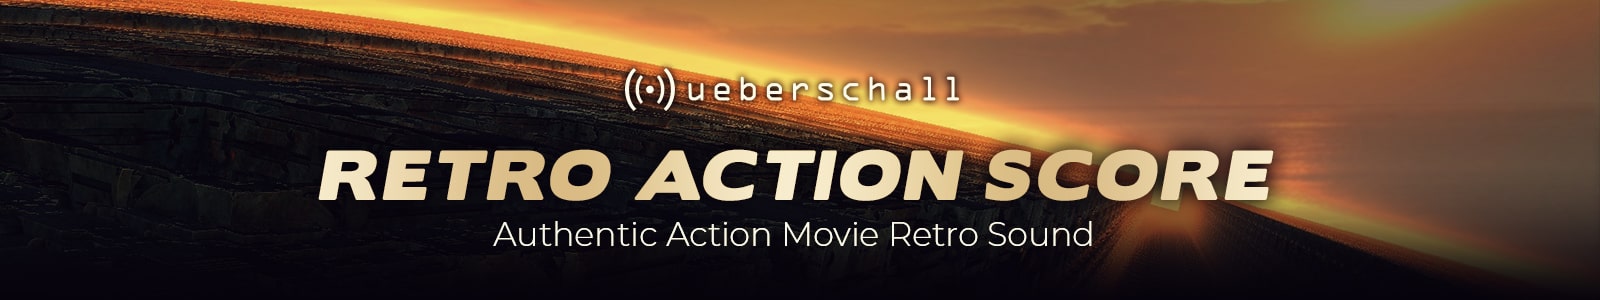 retro action score by ueberschall